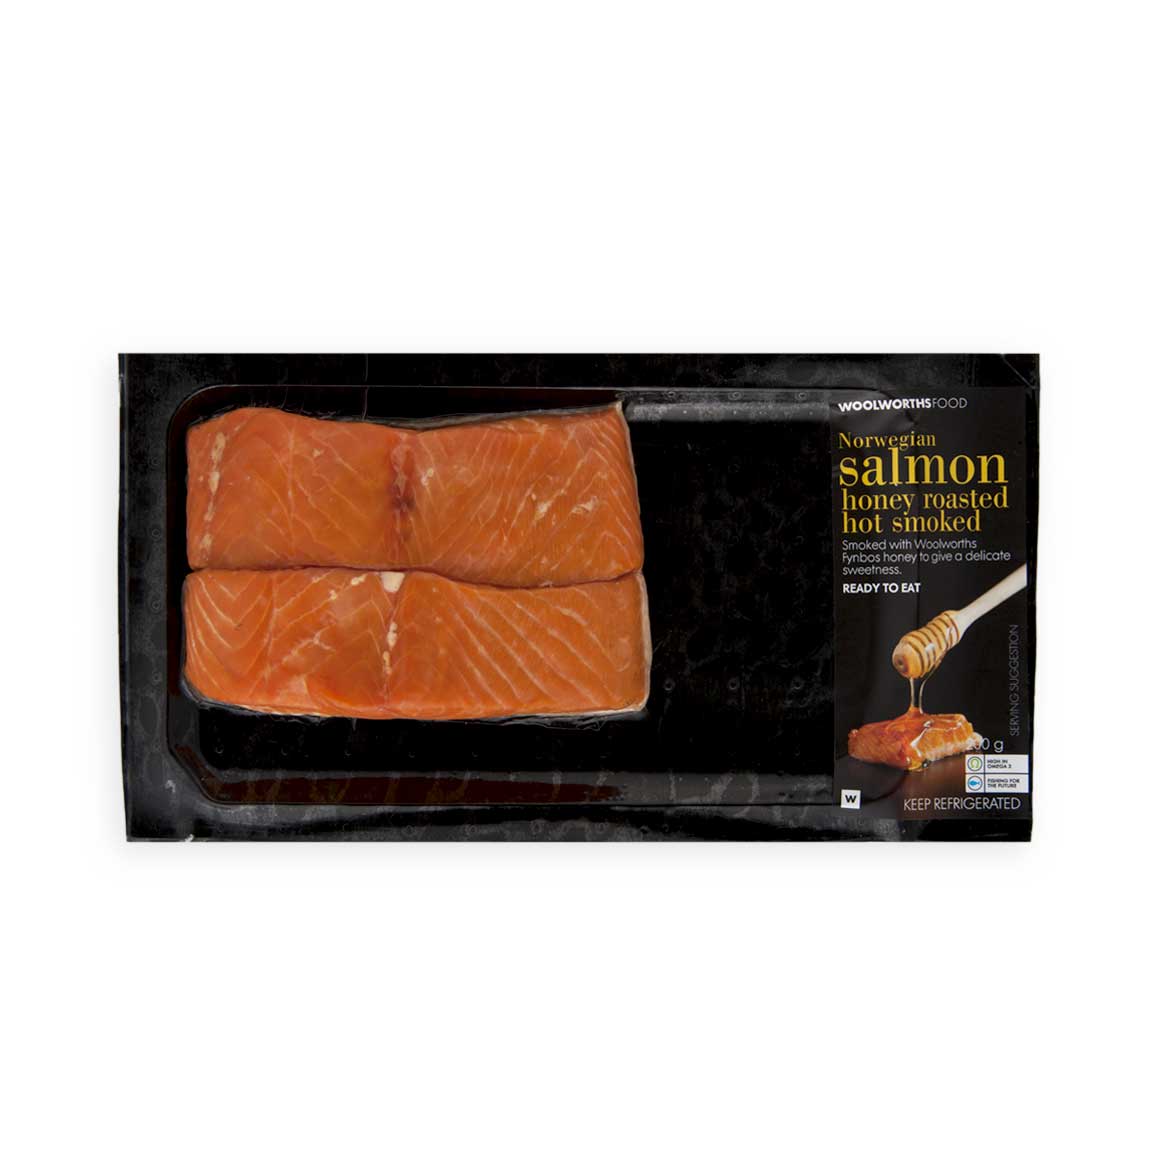 Norwegian Salmon Honey Roasted Hot Smoked 200g | Woolworths.co.za